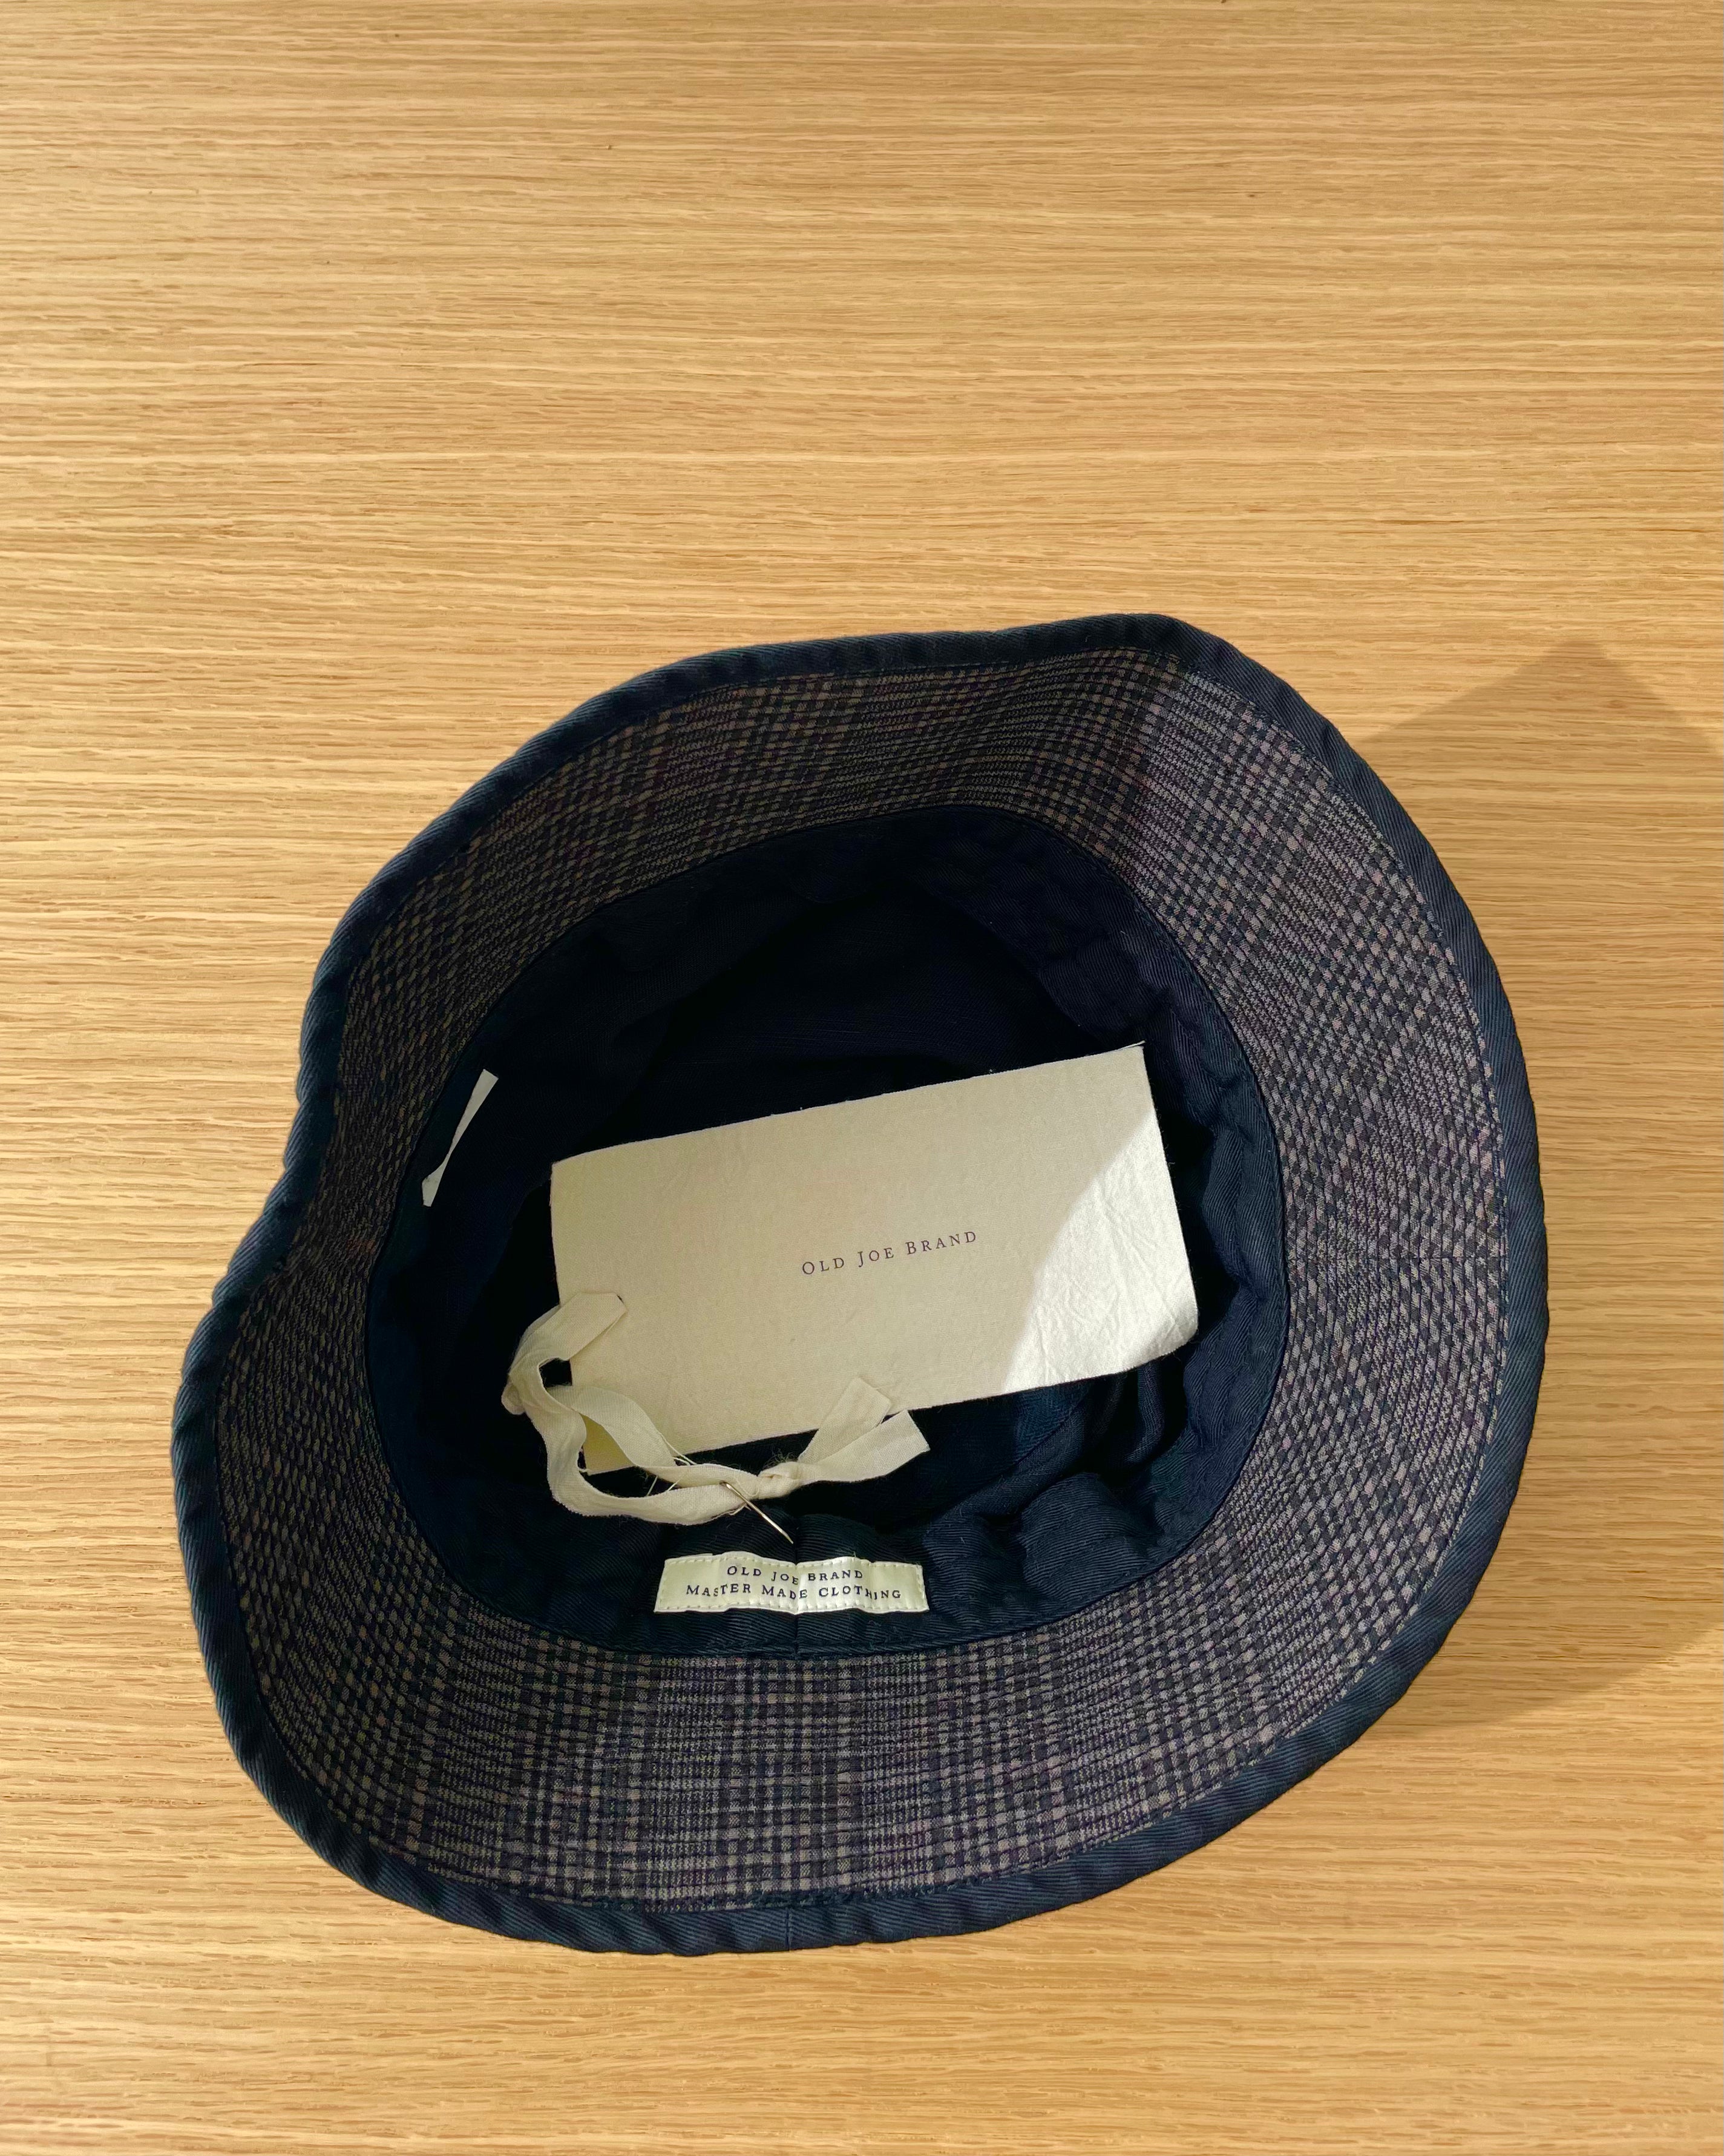 Distressed Cotton-Linen Bucket Hat - Black